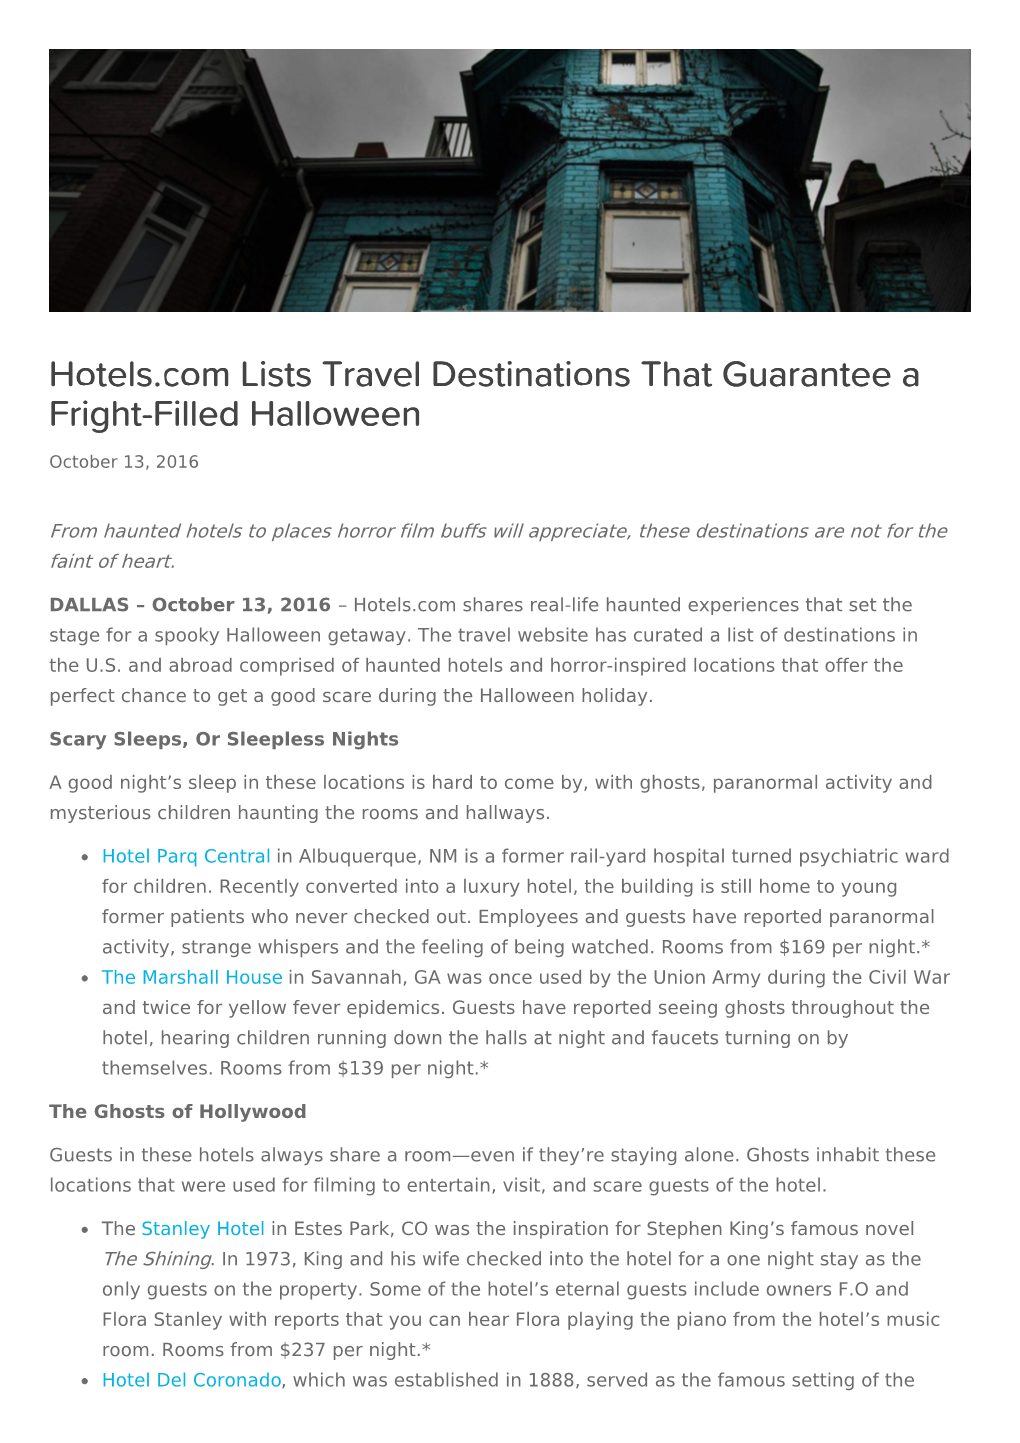 Hotels.Com Lists Travel Destinations That Guarantee a Fright-Filled Halloween